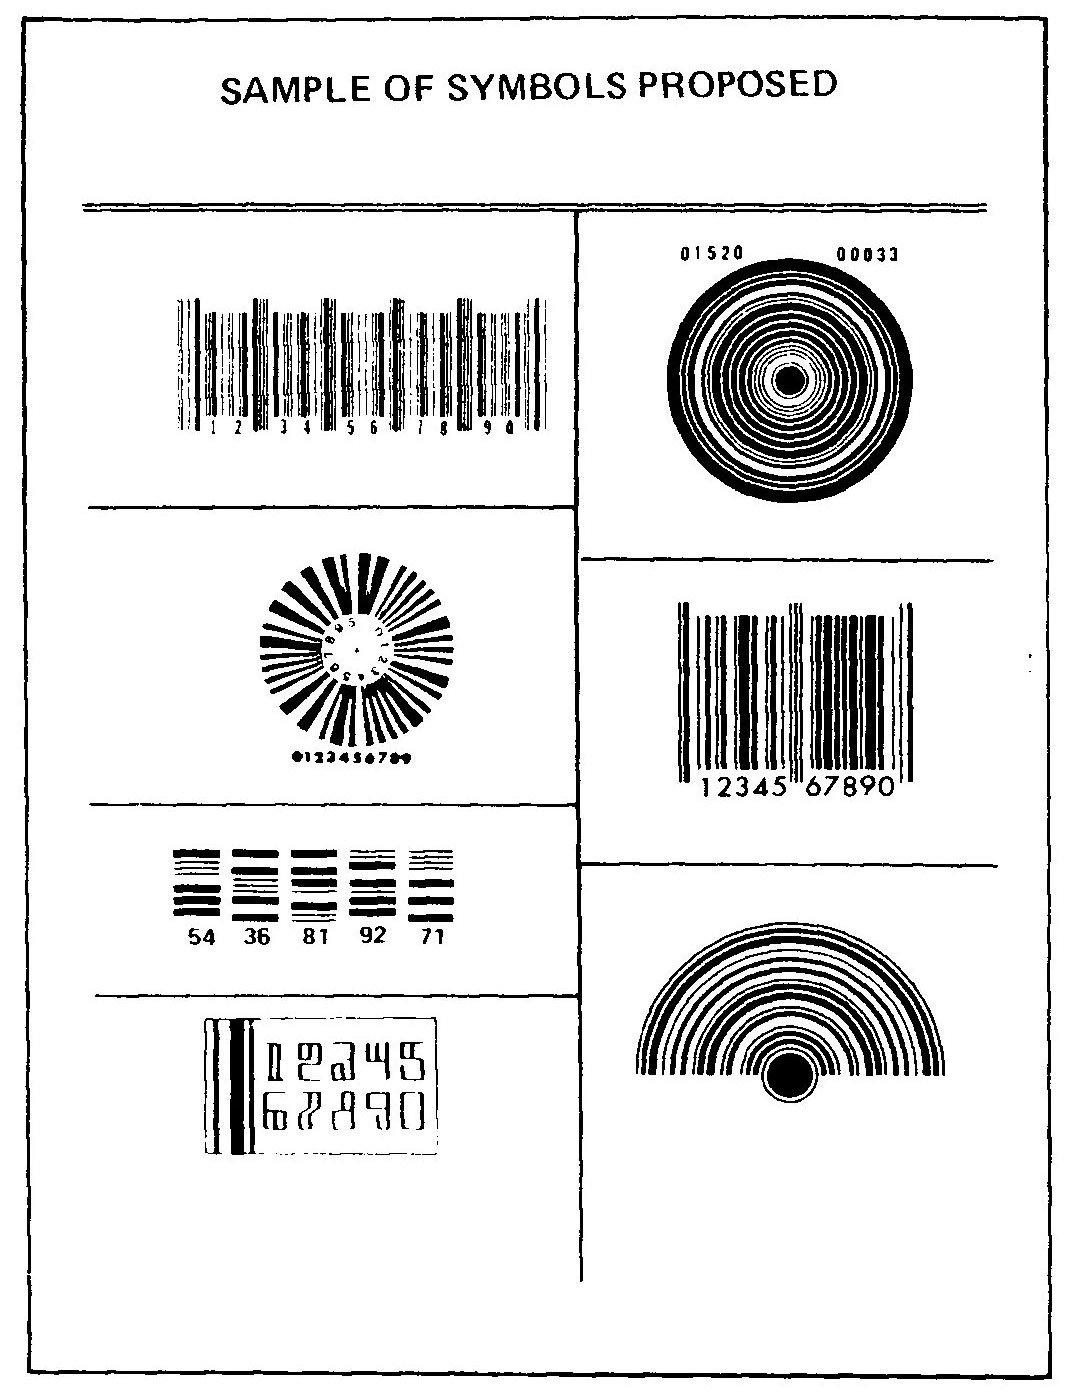 Properties barcode image